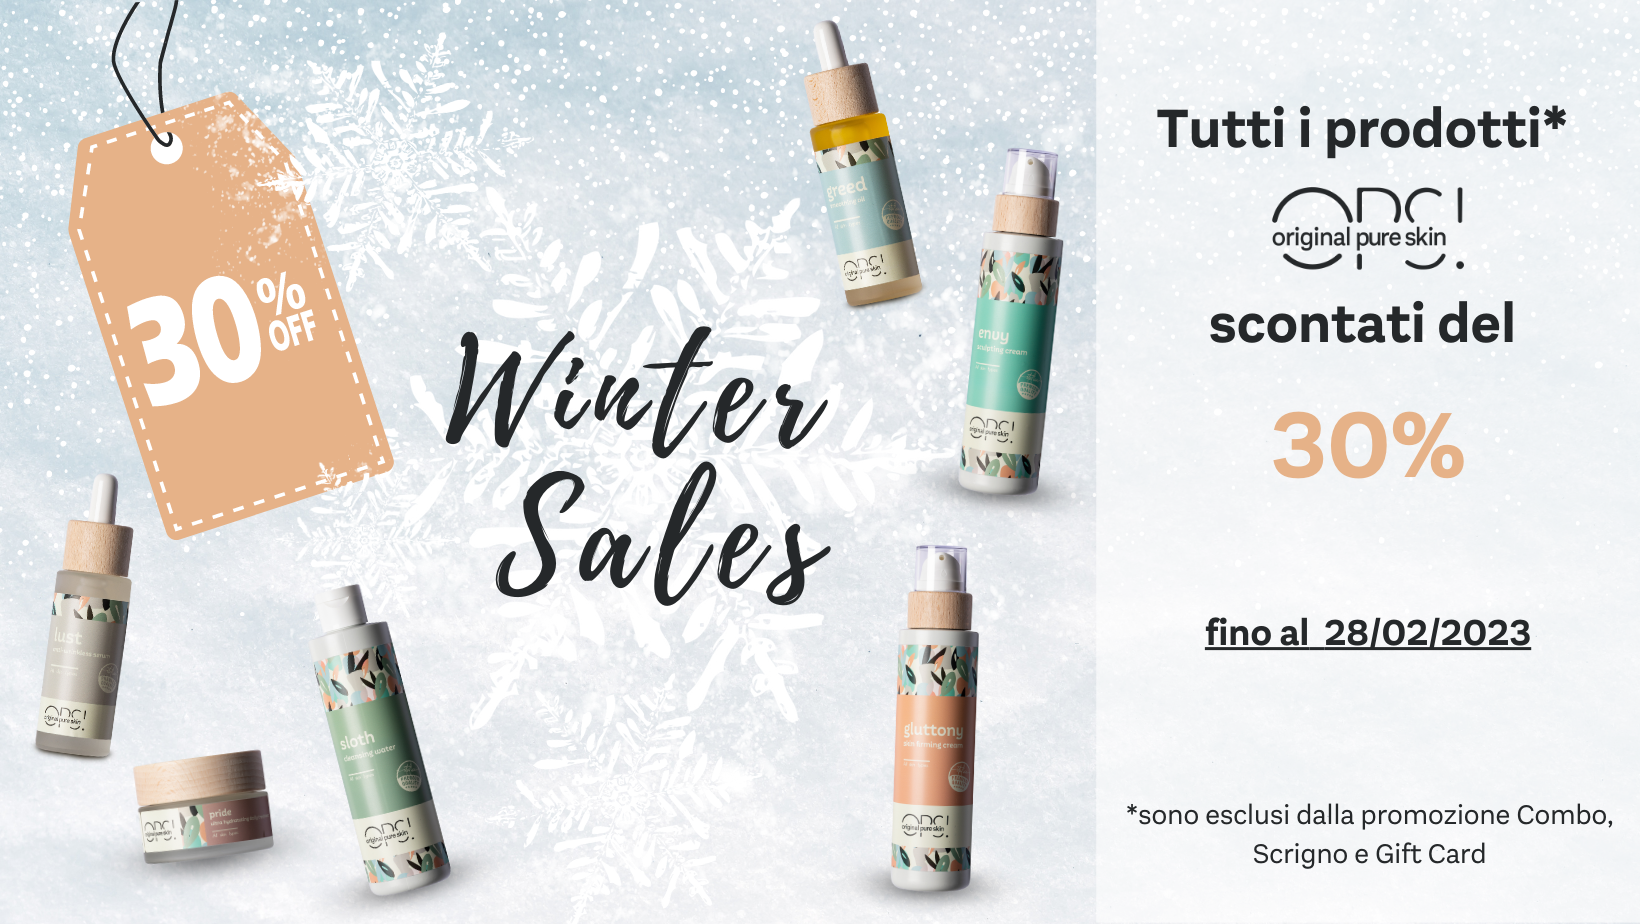 Winter Sales 30% off